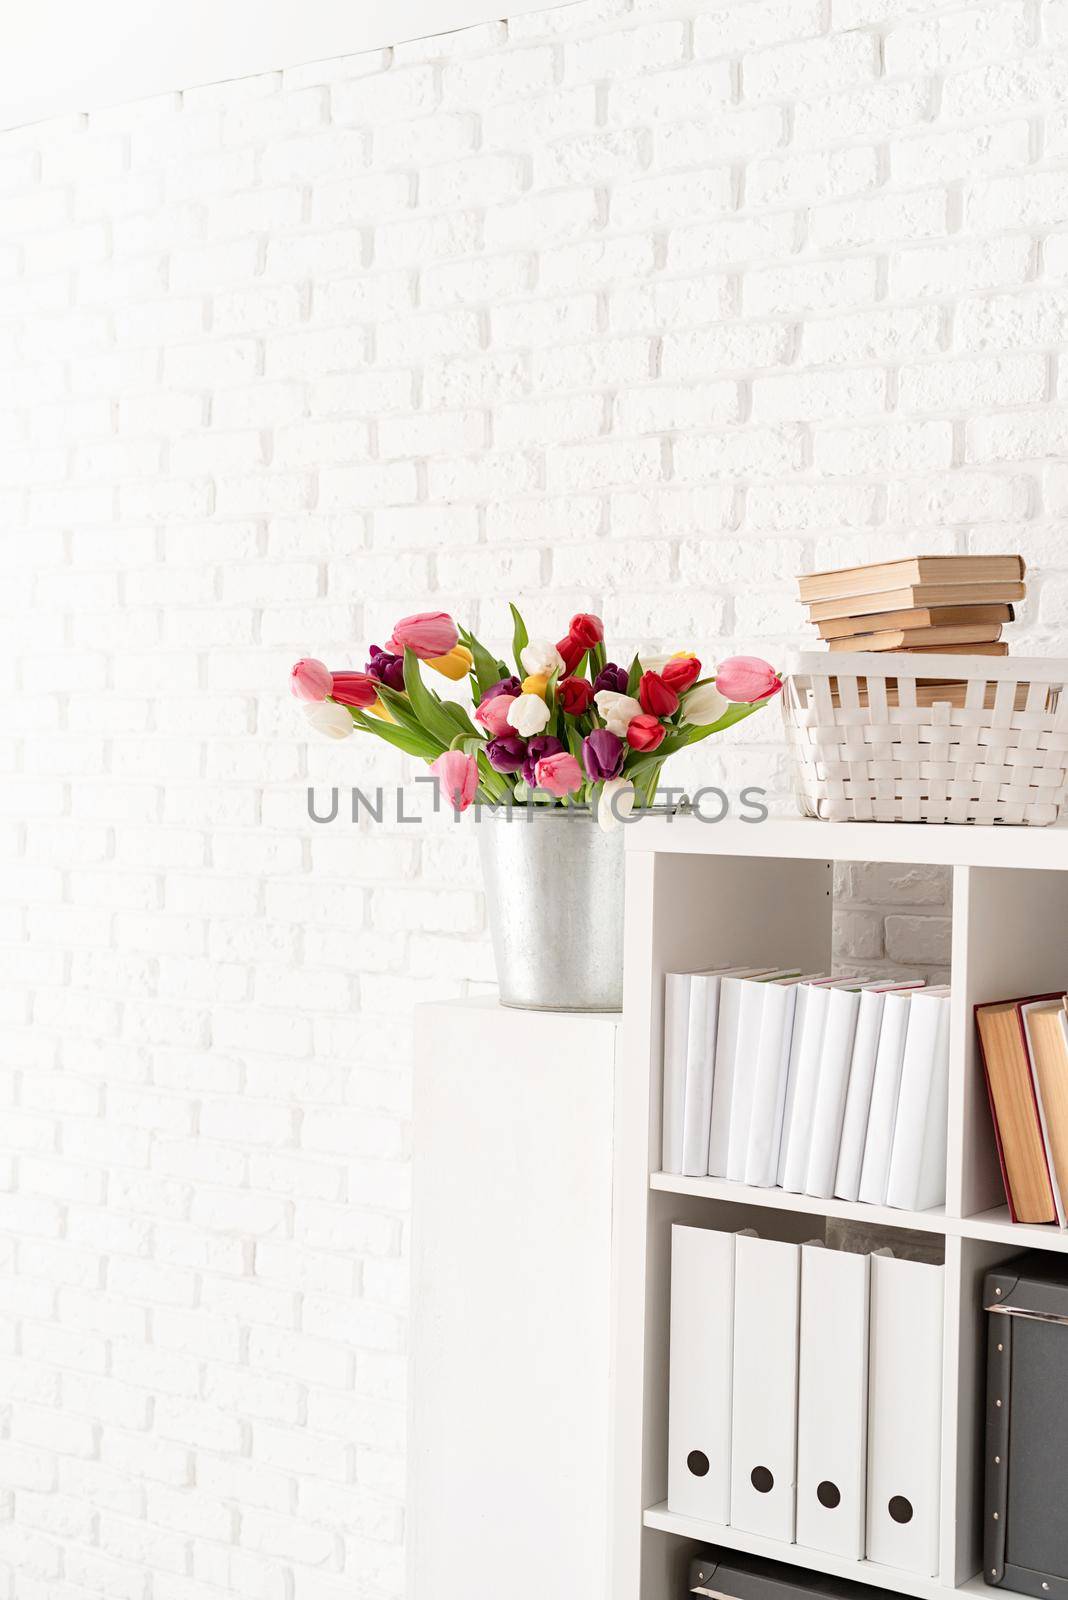 Bucket of tulip flowers next to the bookshelf over white brick wall background by Desperada